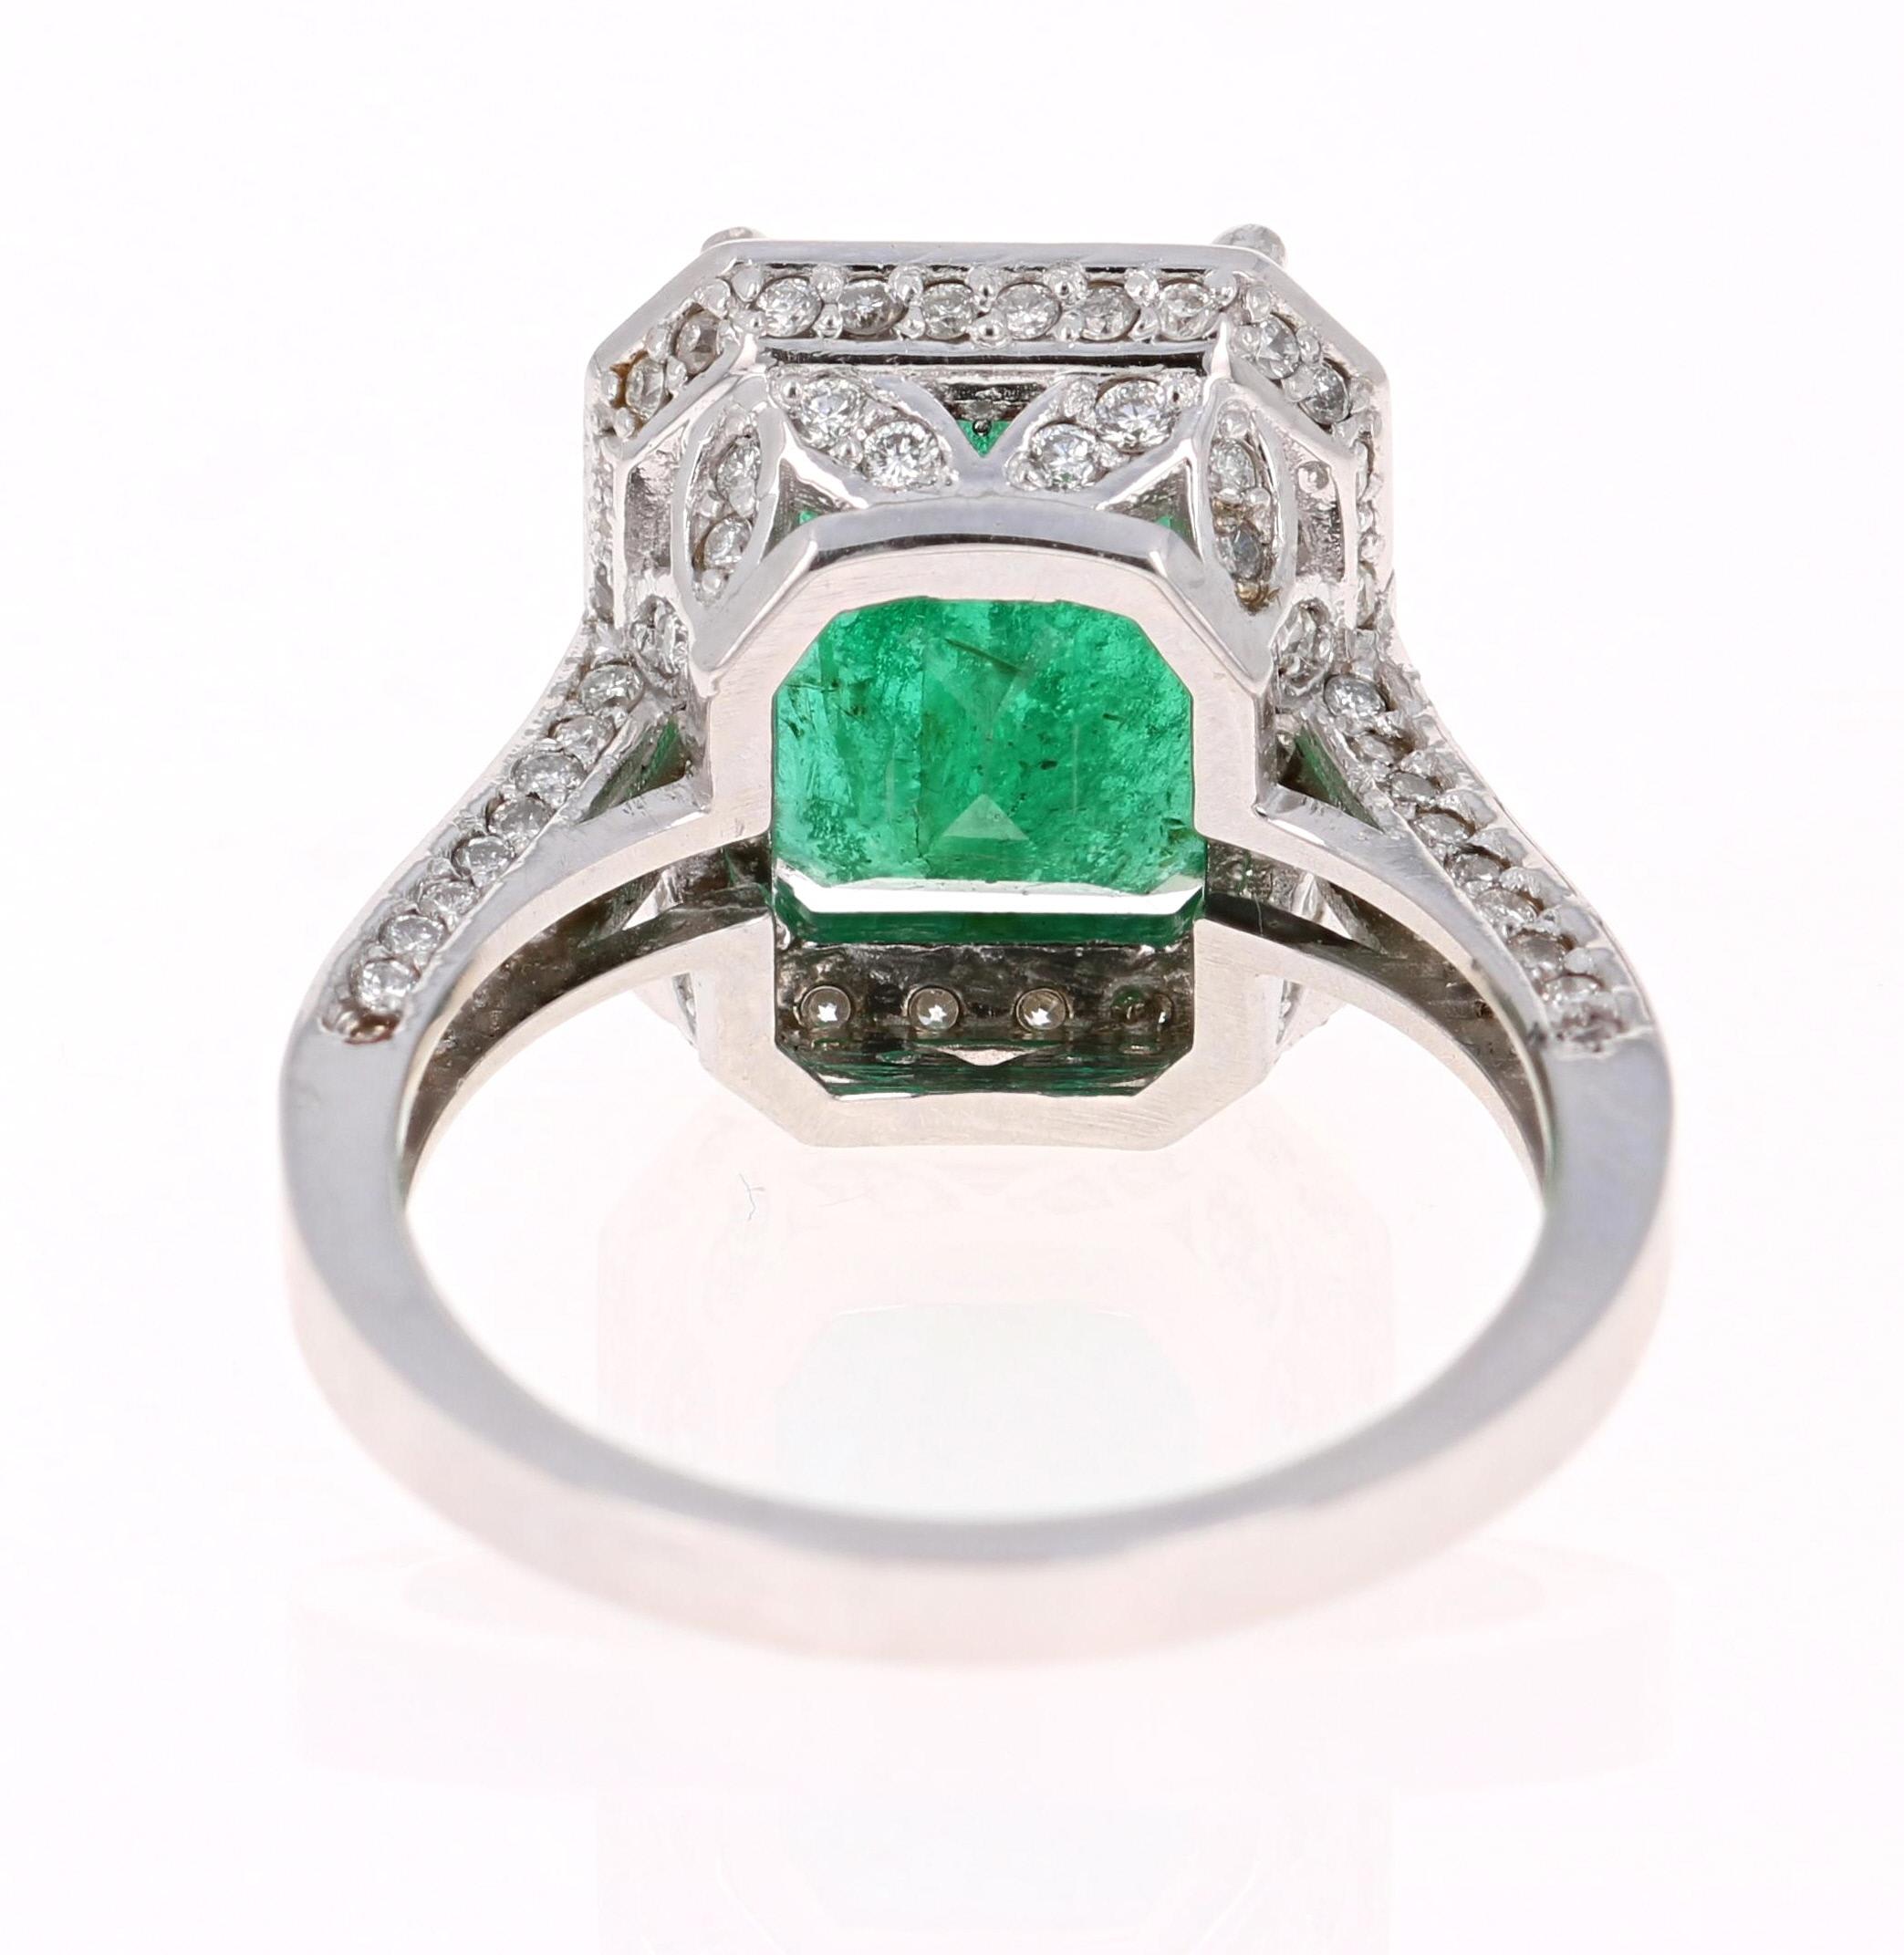 Emerald Cut 5.18 Carat Emerald Diamond White Gold Engagement Ring